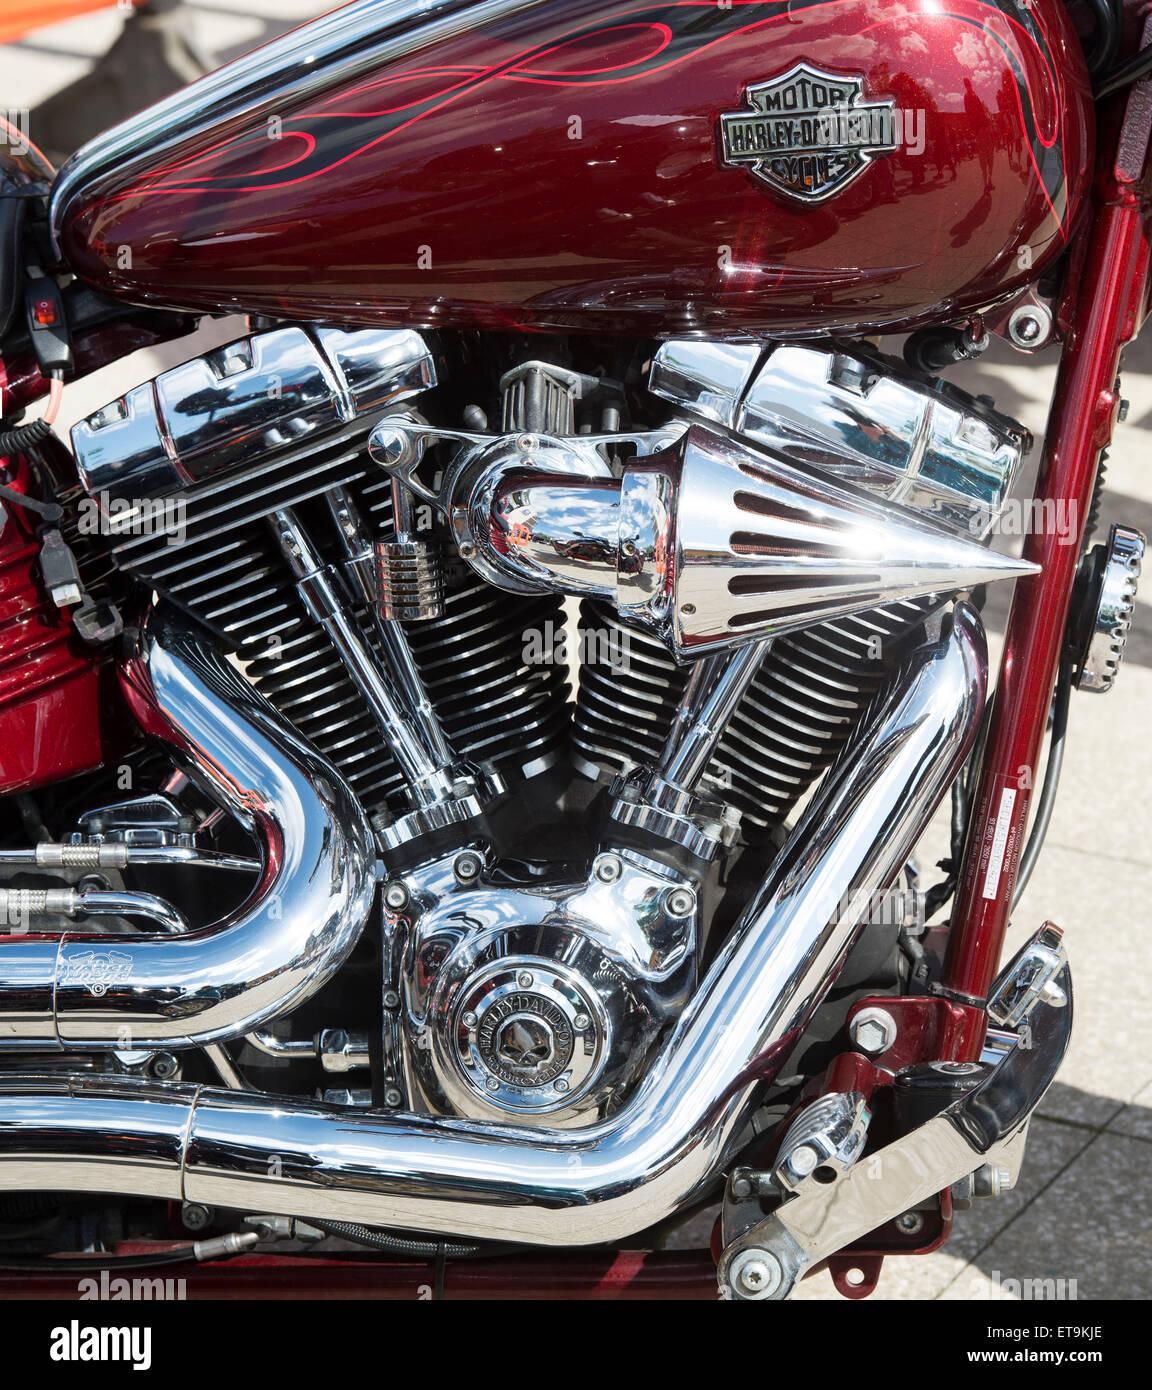 V Twin Harley Davidson Motor